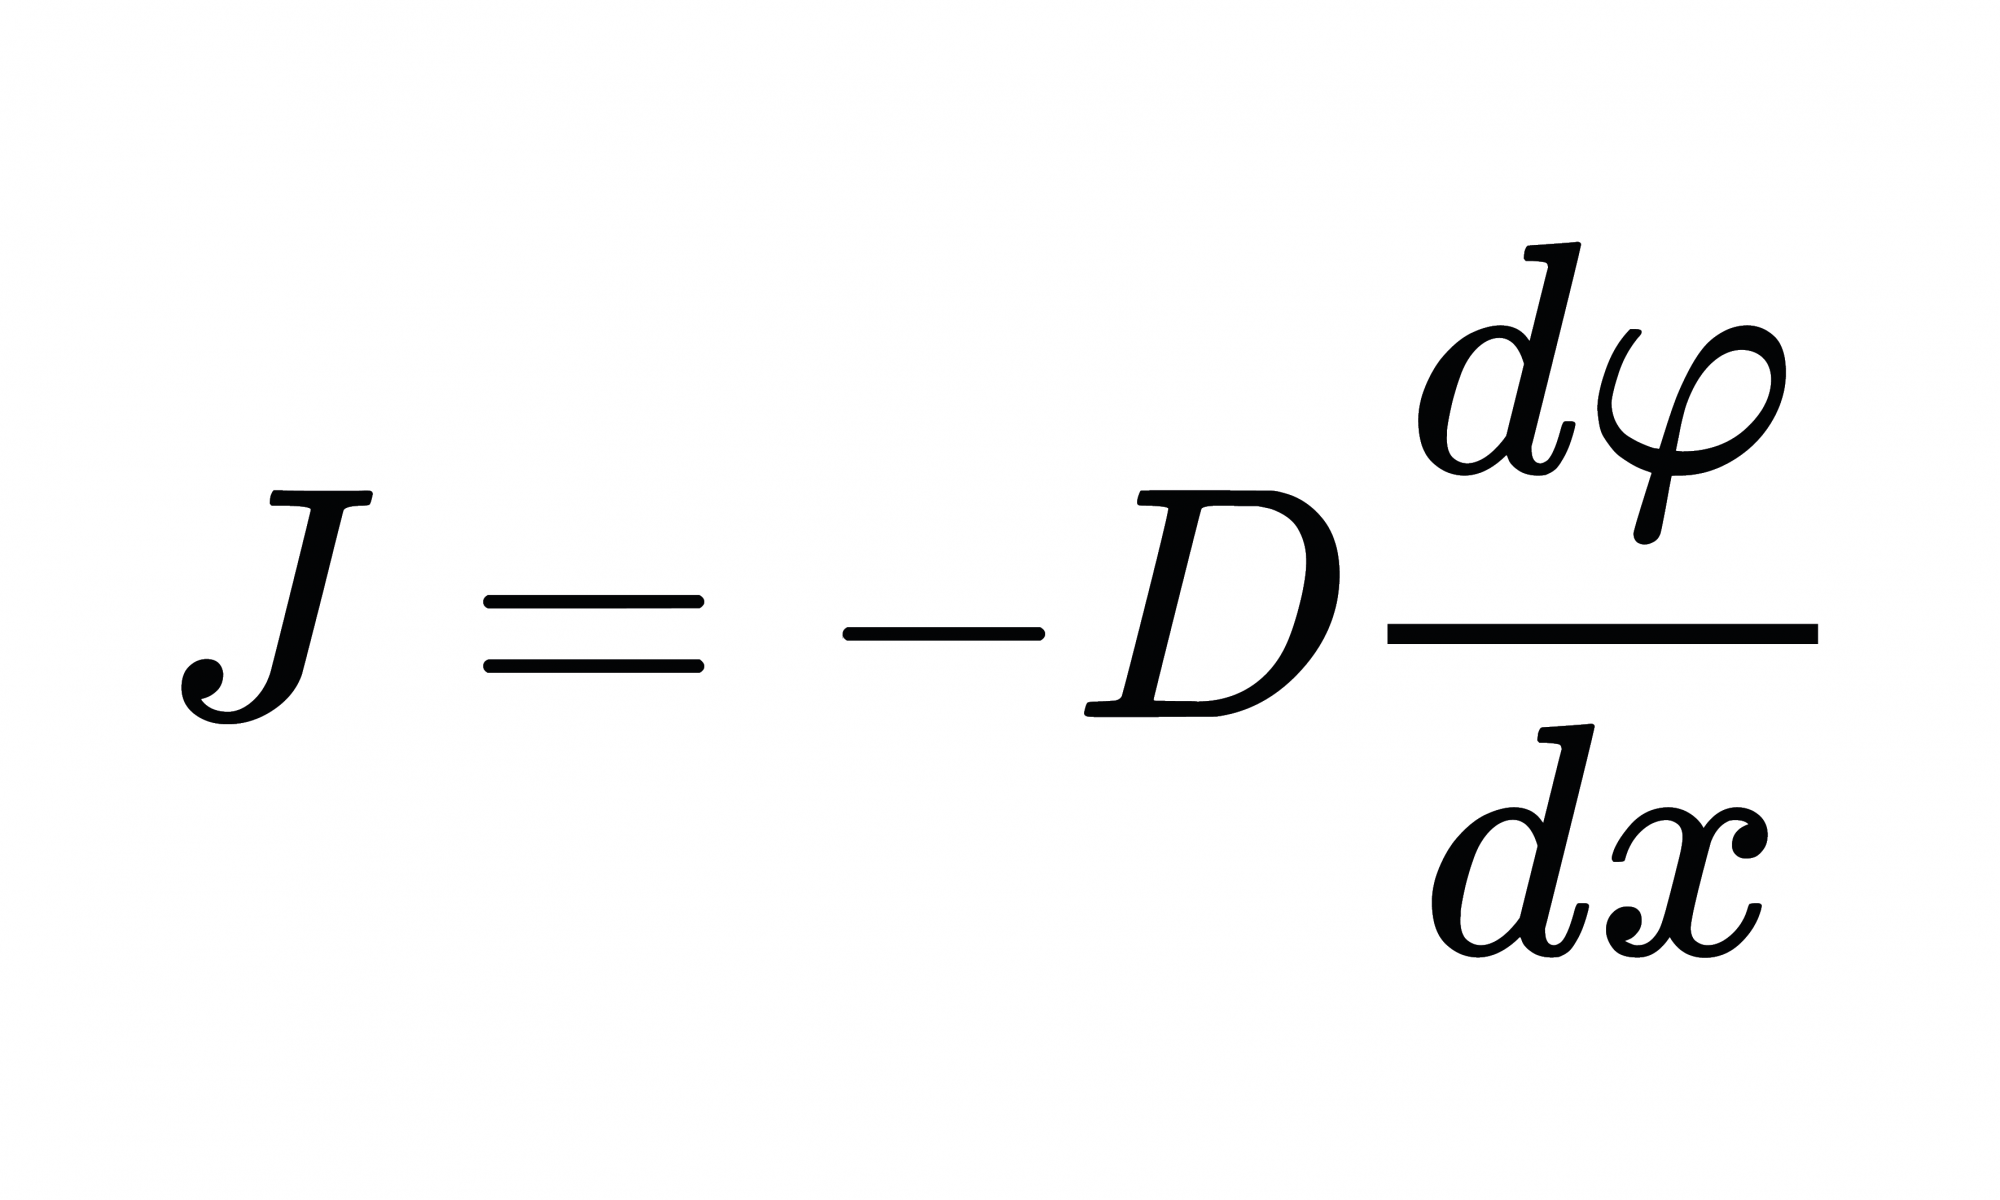 An image of a formula.